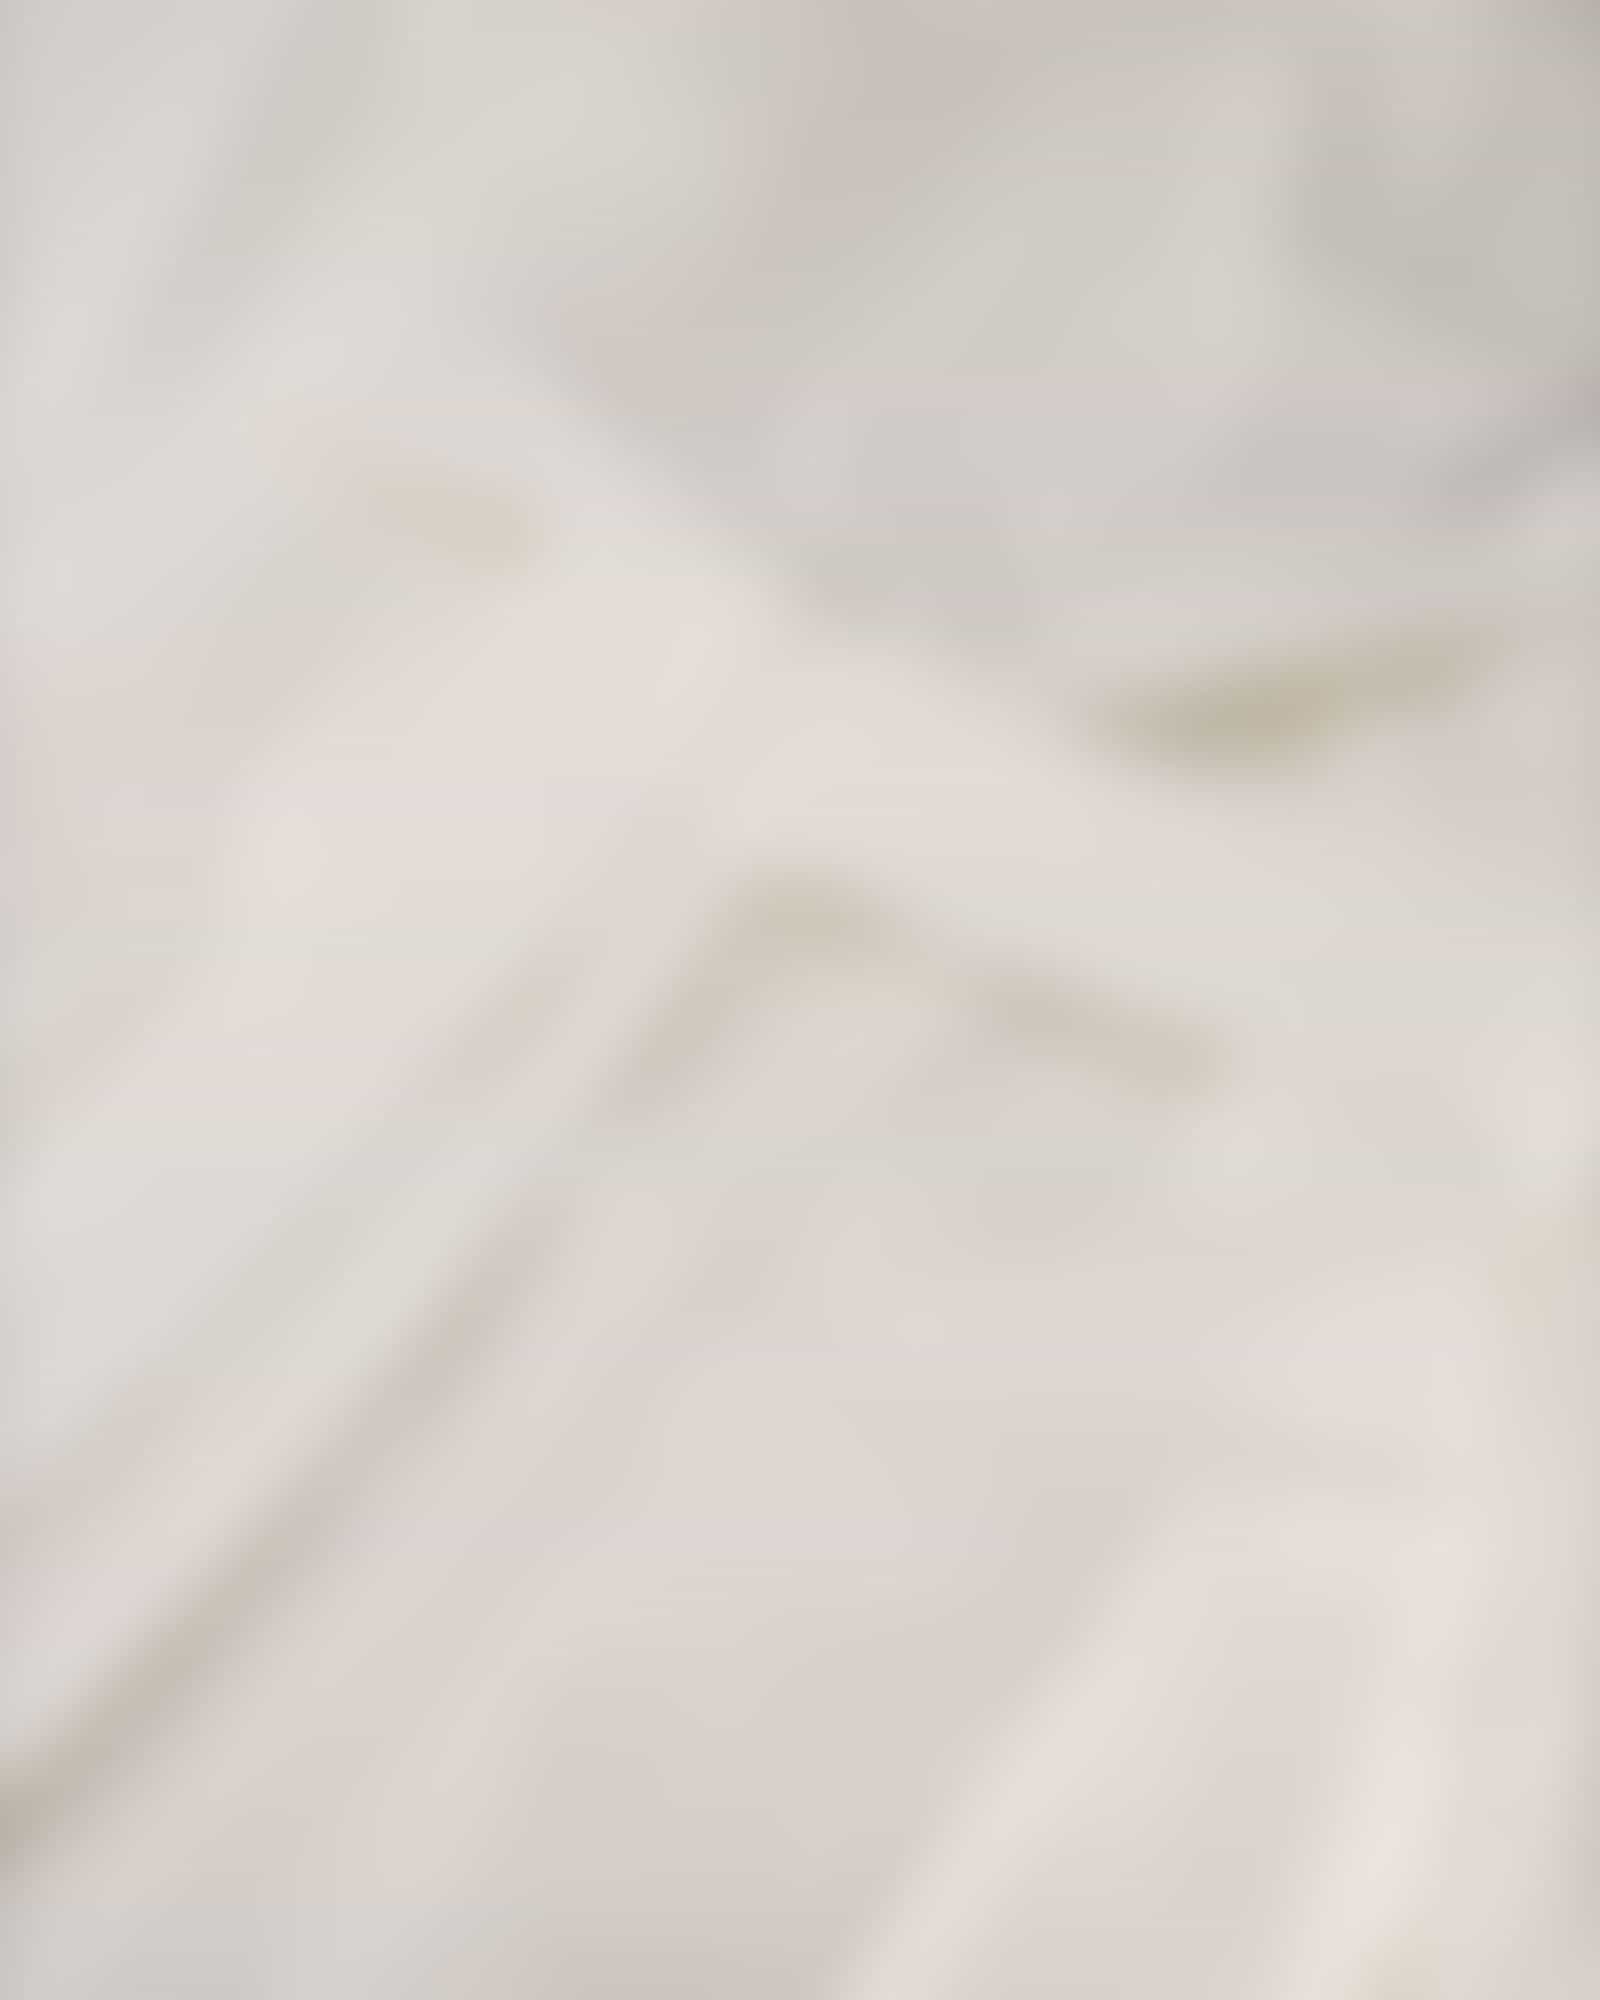 JOOP Herren Bademantel Kimono Pique 1656 - Farbe: Weiß - 600 - S Detailbild 3